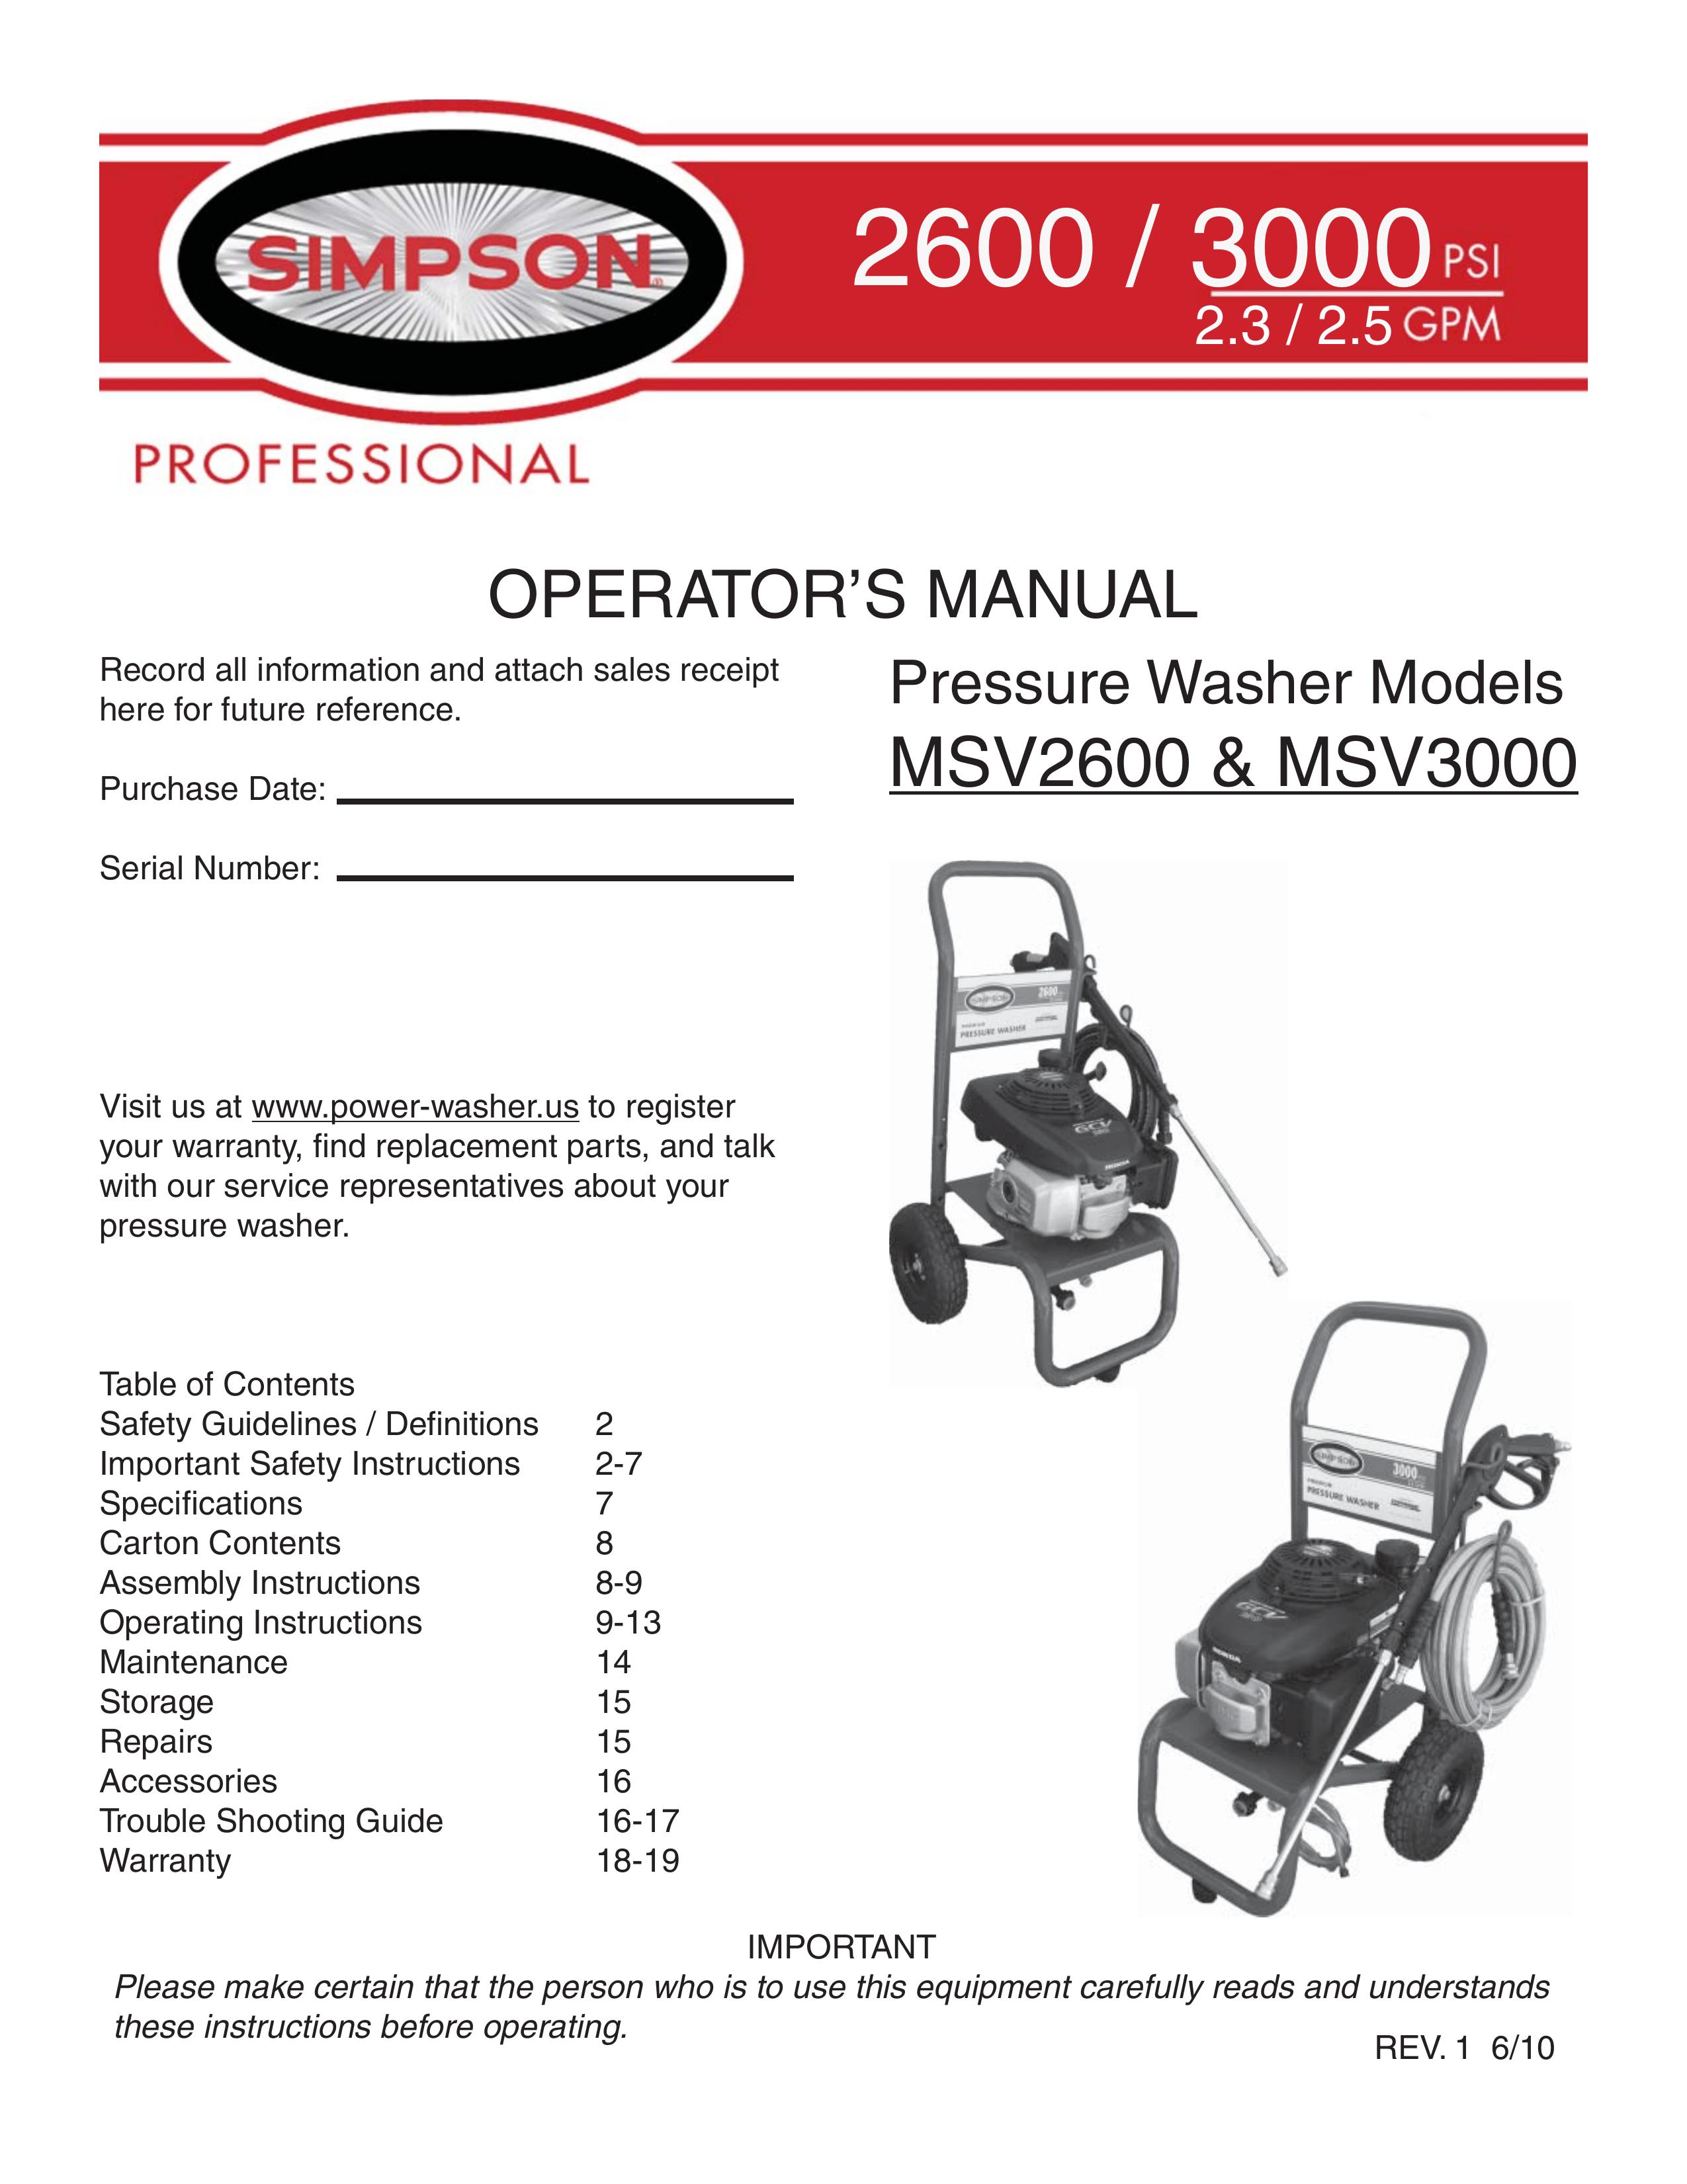 Simpson MSV3000 Pressure Washer User Manual